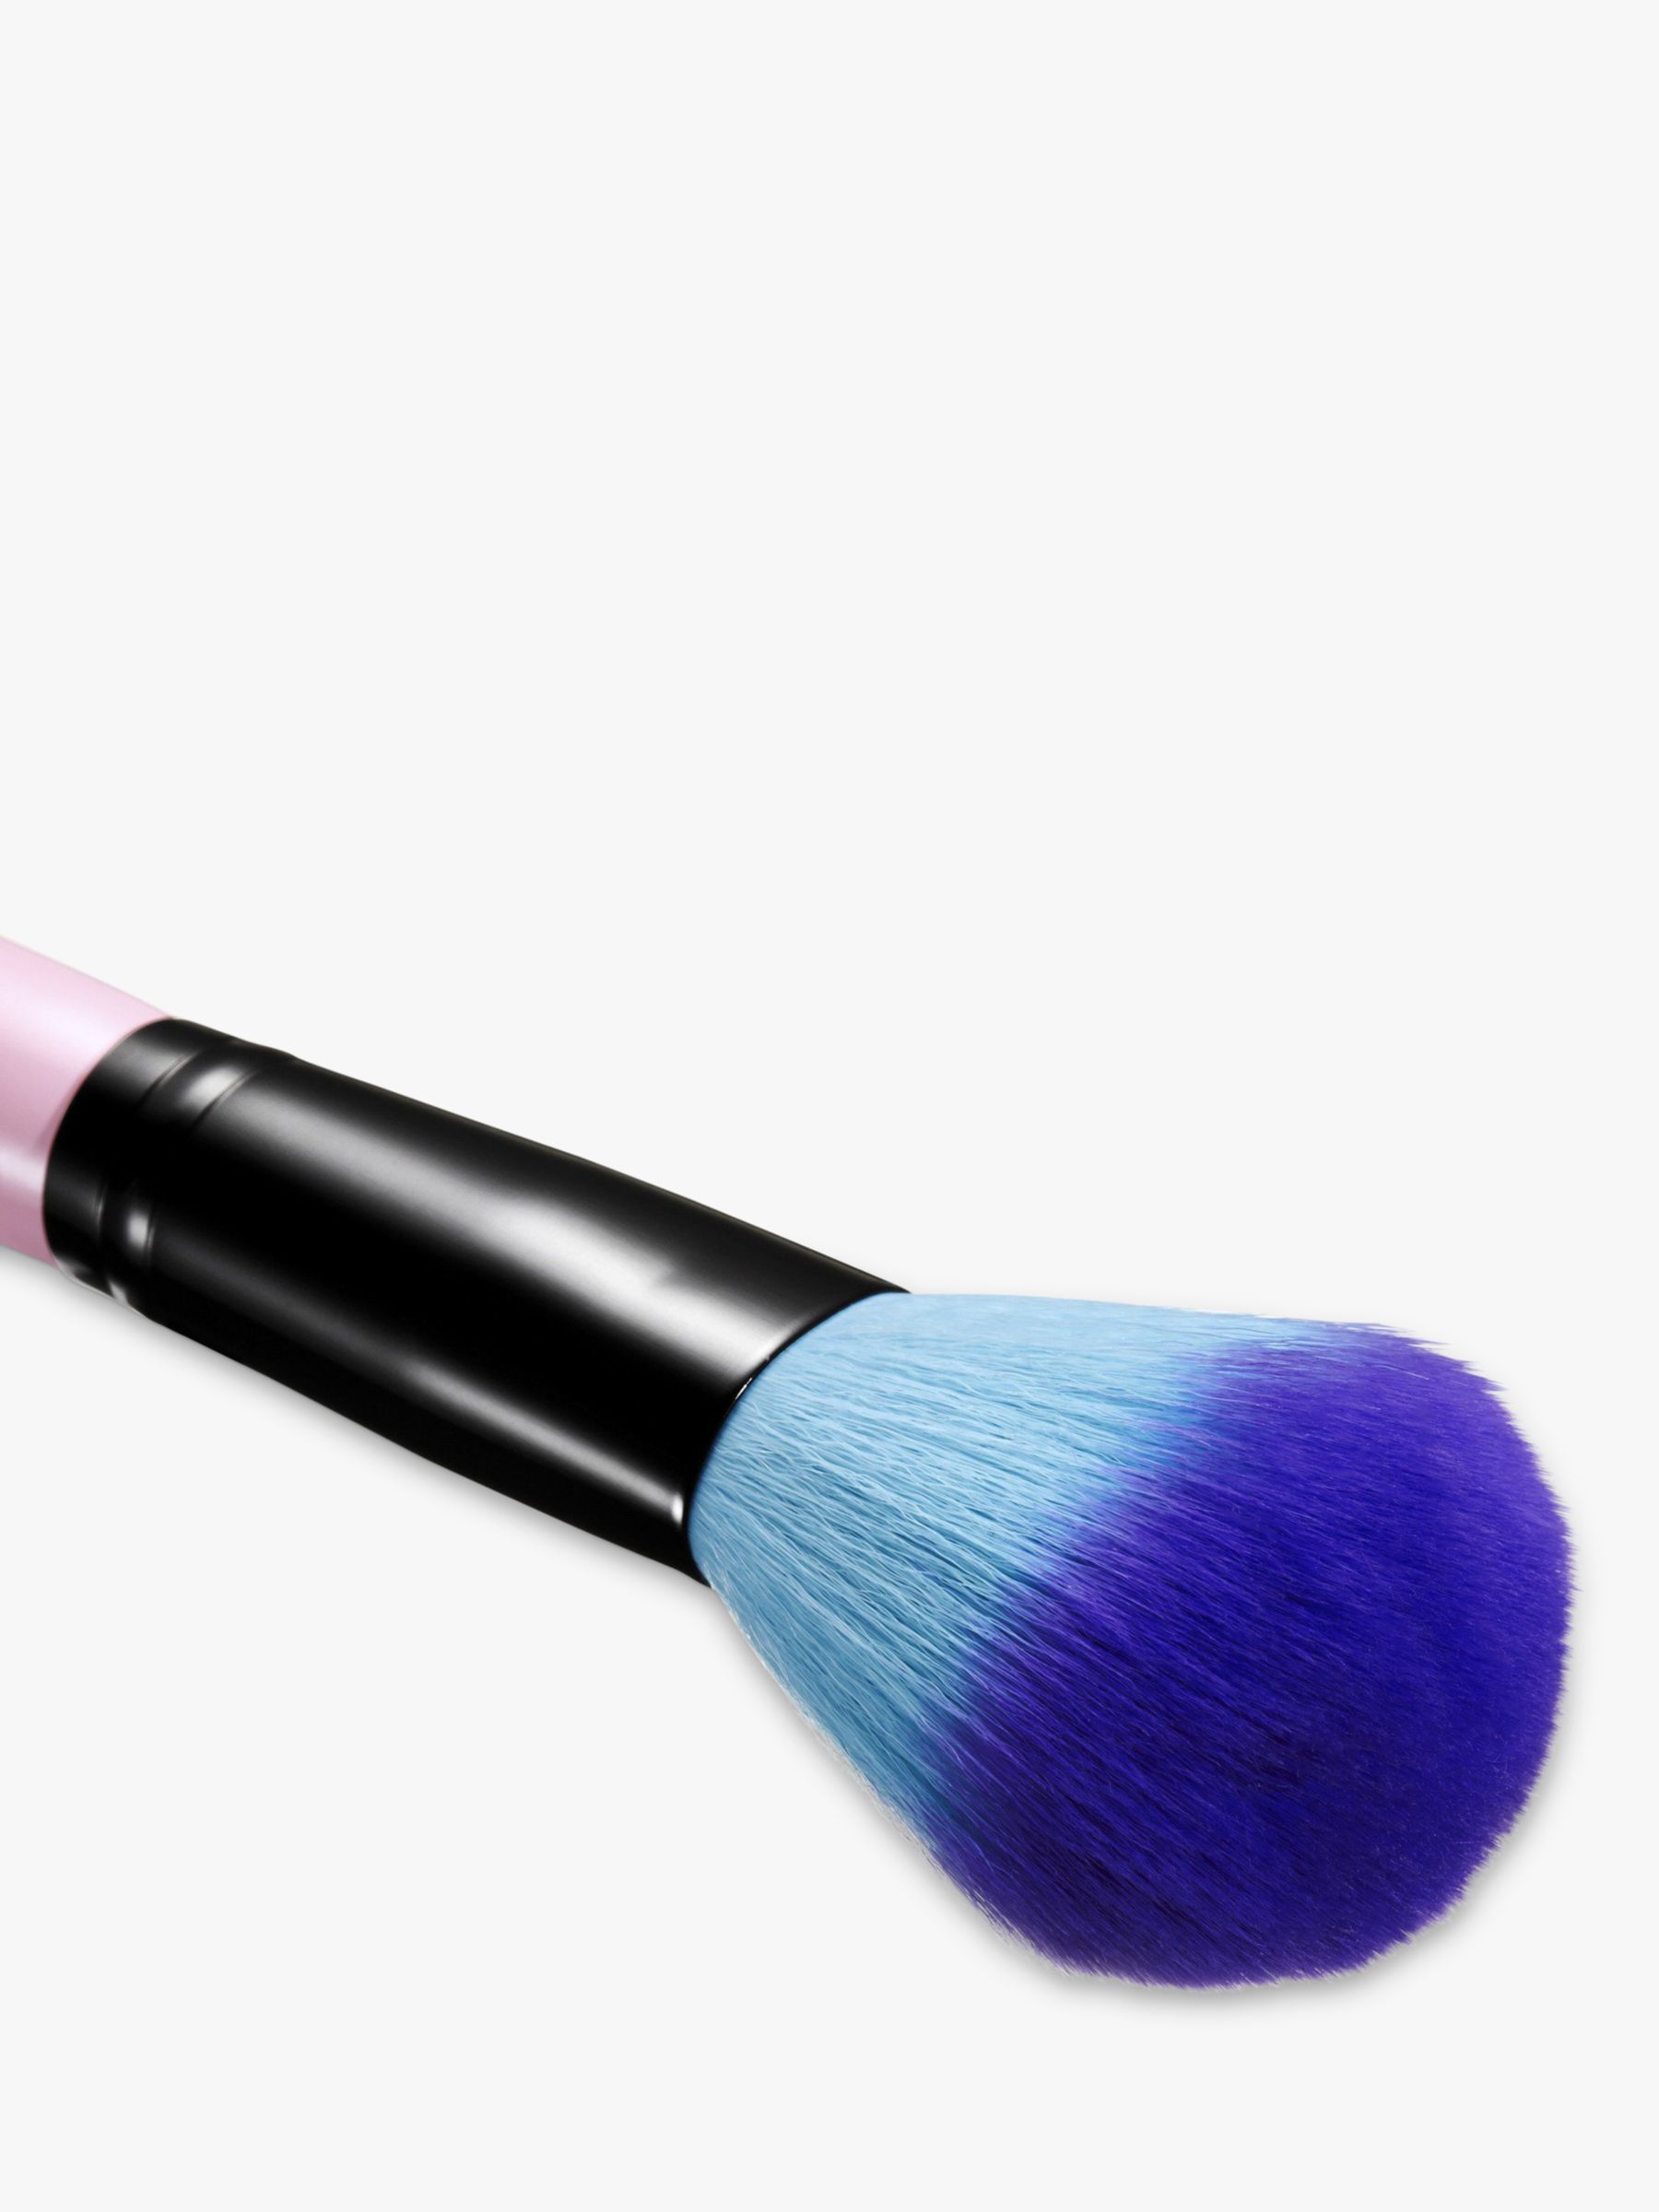 Spectrum Domed Powder Makeup Brush 3